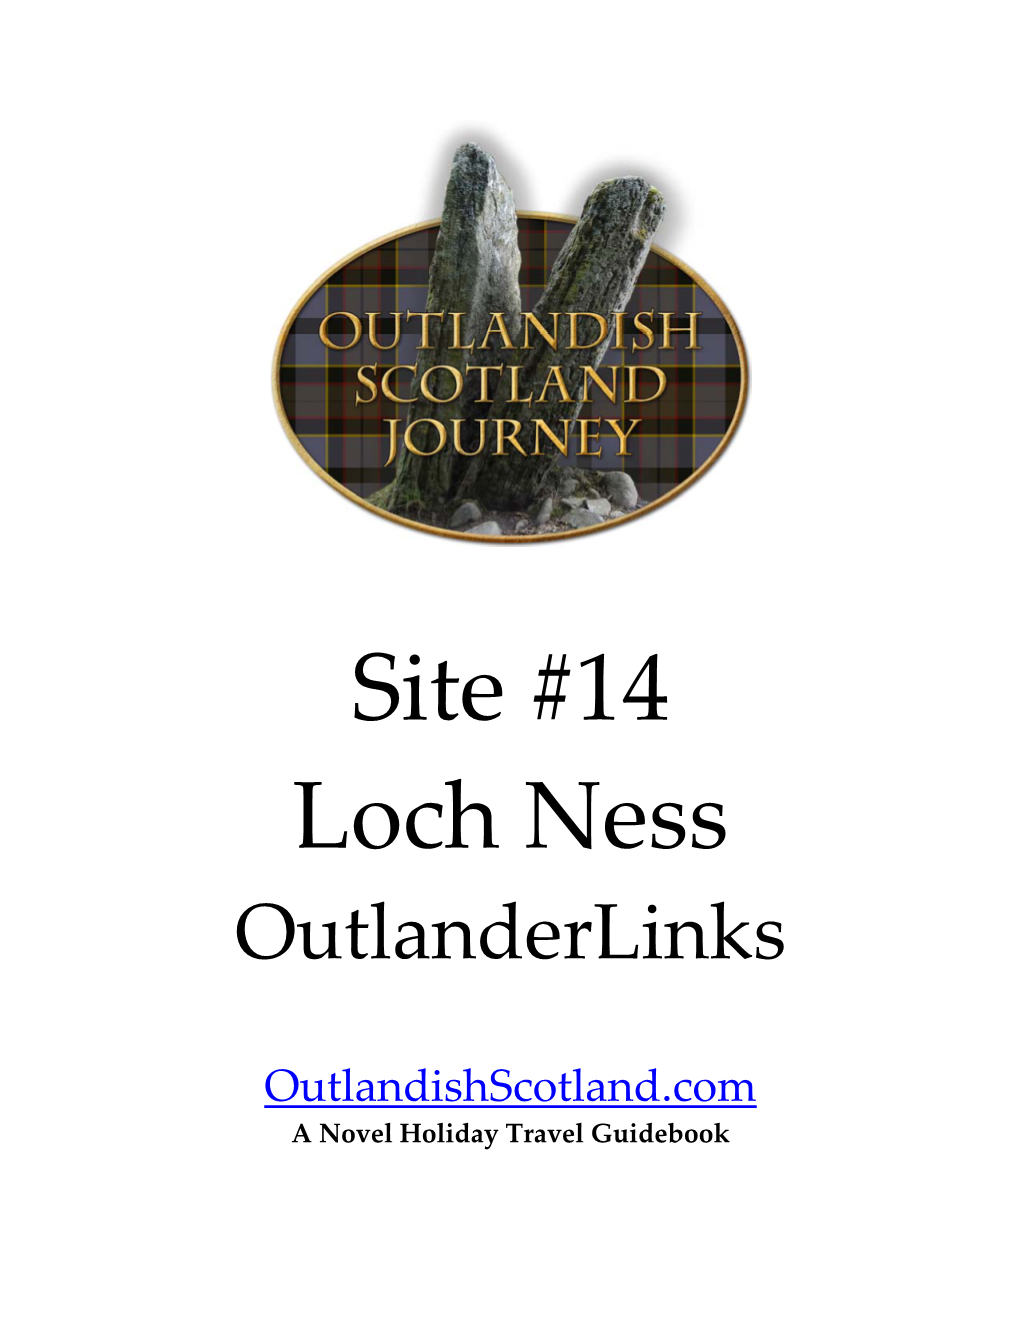 Loch Ness Outlanderlinks